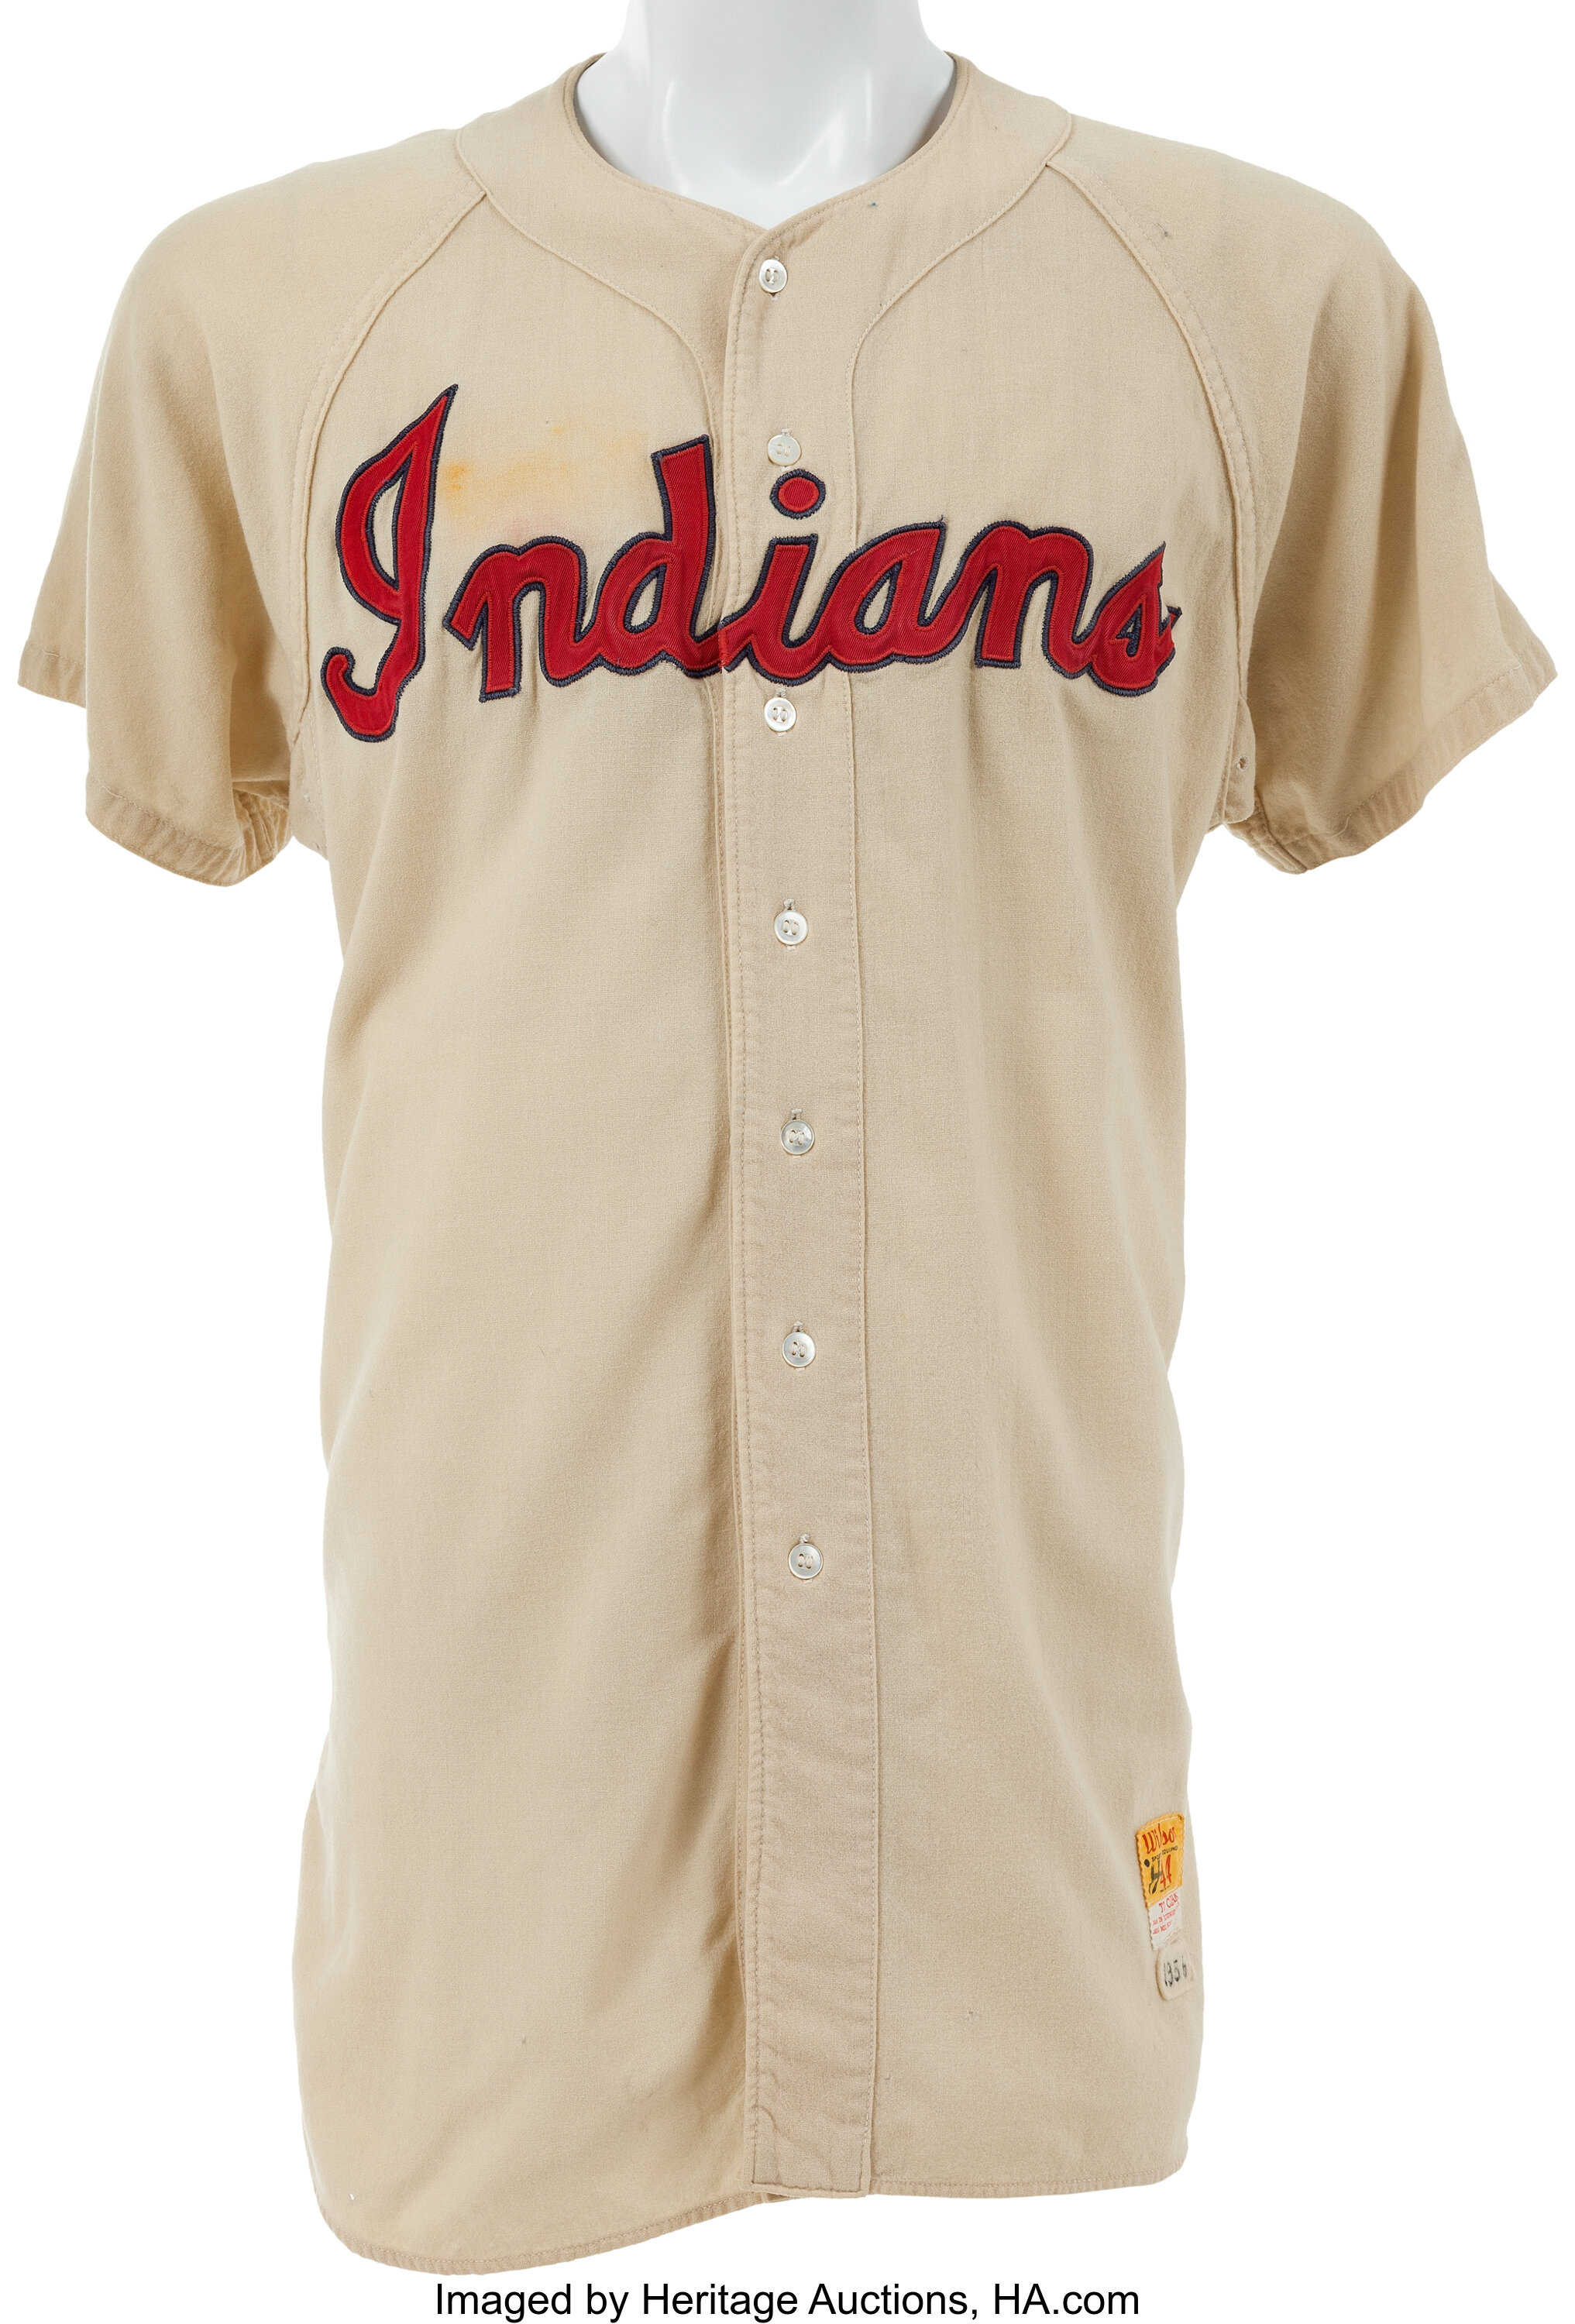 1956 Herb Score Game Worn Cleveland Indians Jersey. Baseball